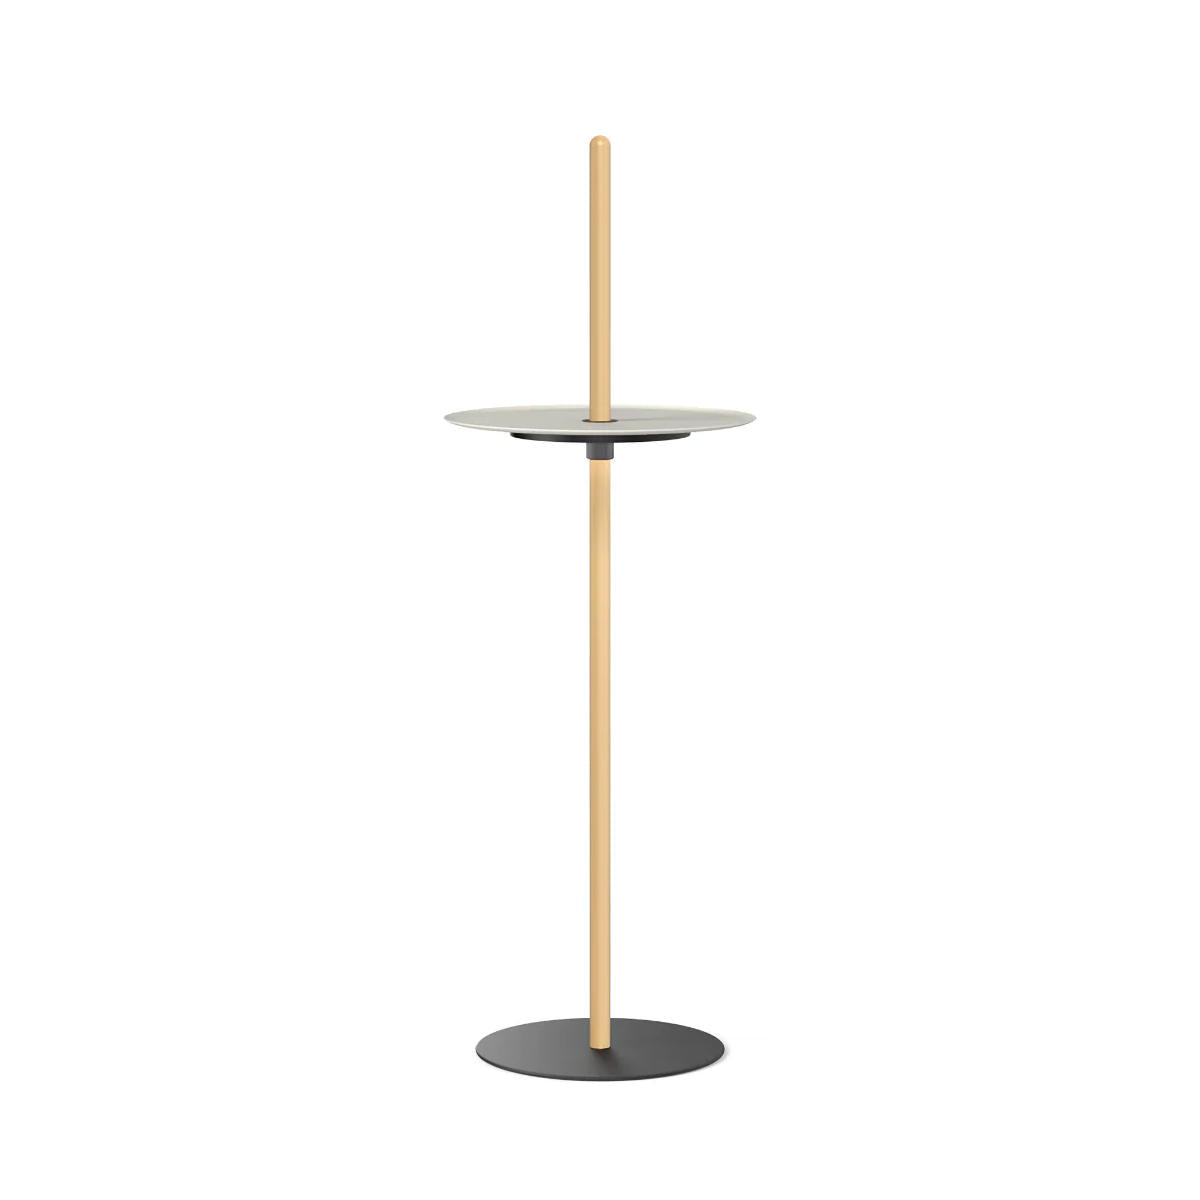 Pablo Designs Nivel Pedestal Floor Light (Rechargeable)